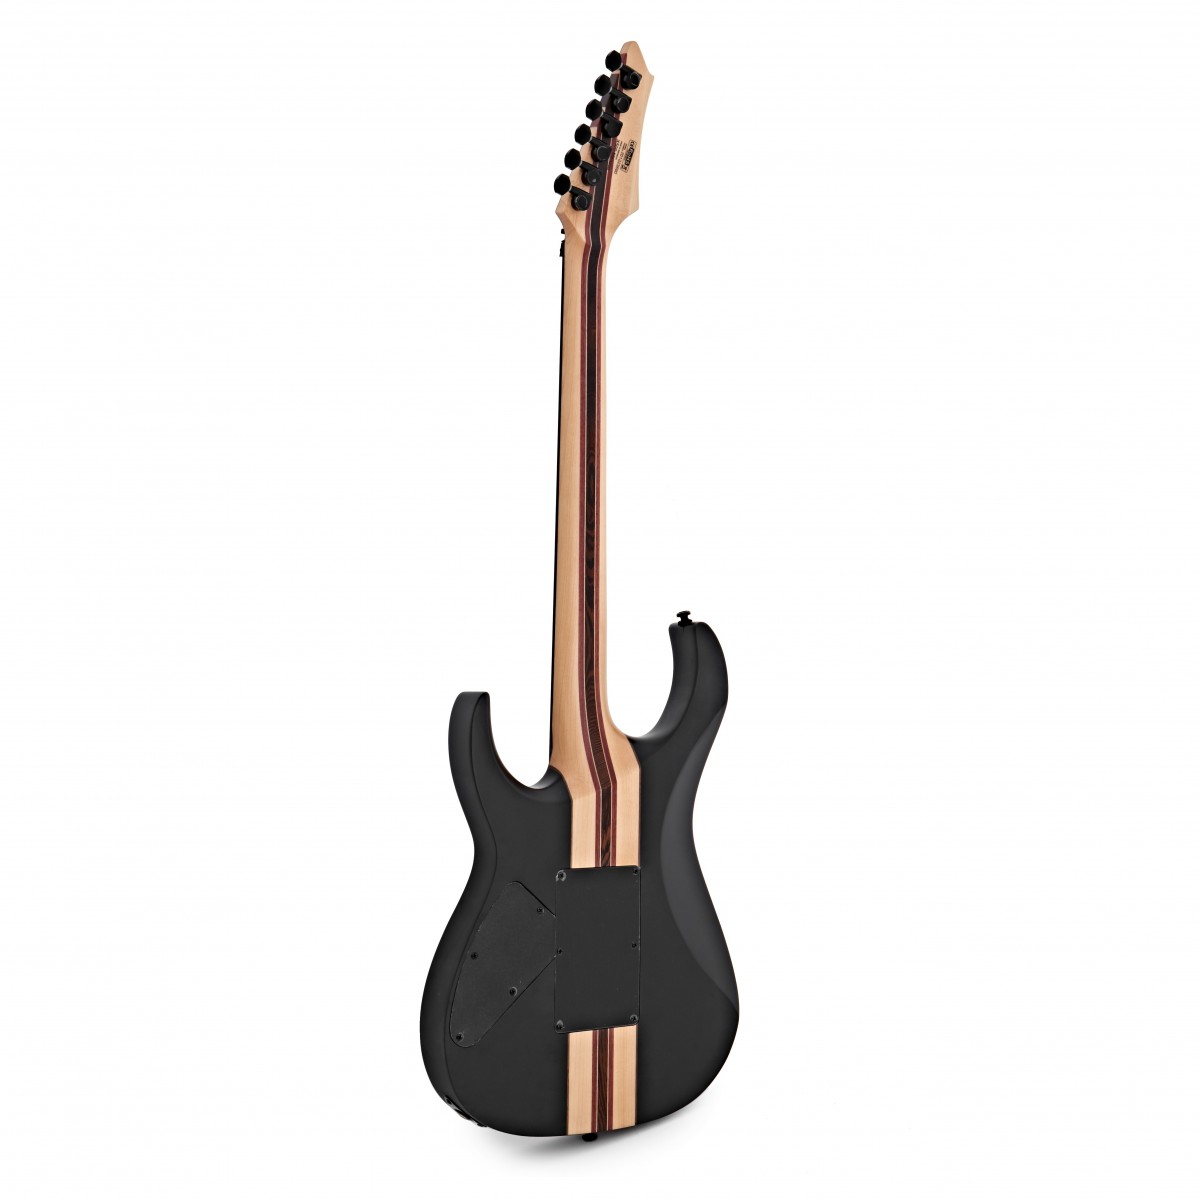 Cort X500 Menace Electric Guitar Online price in India